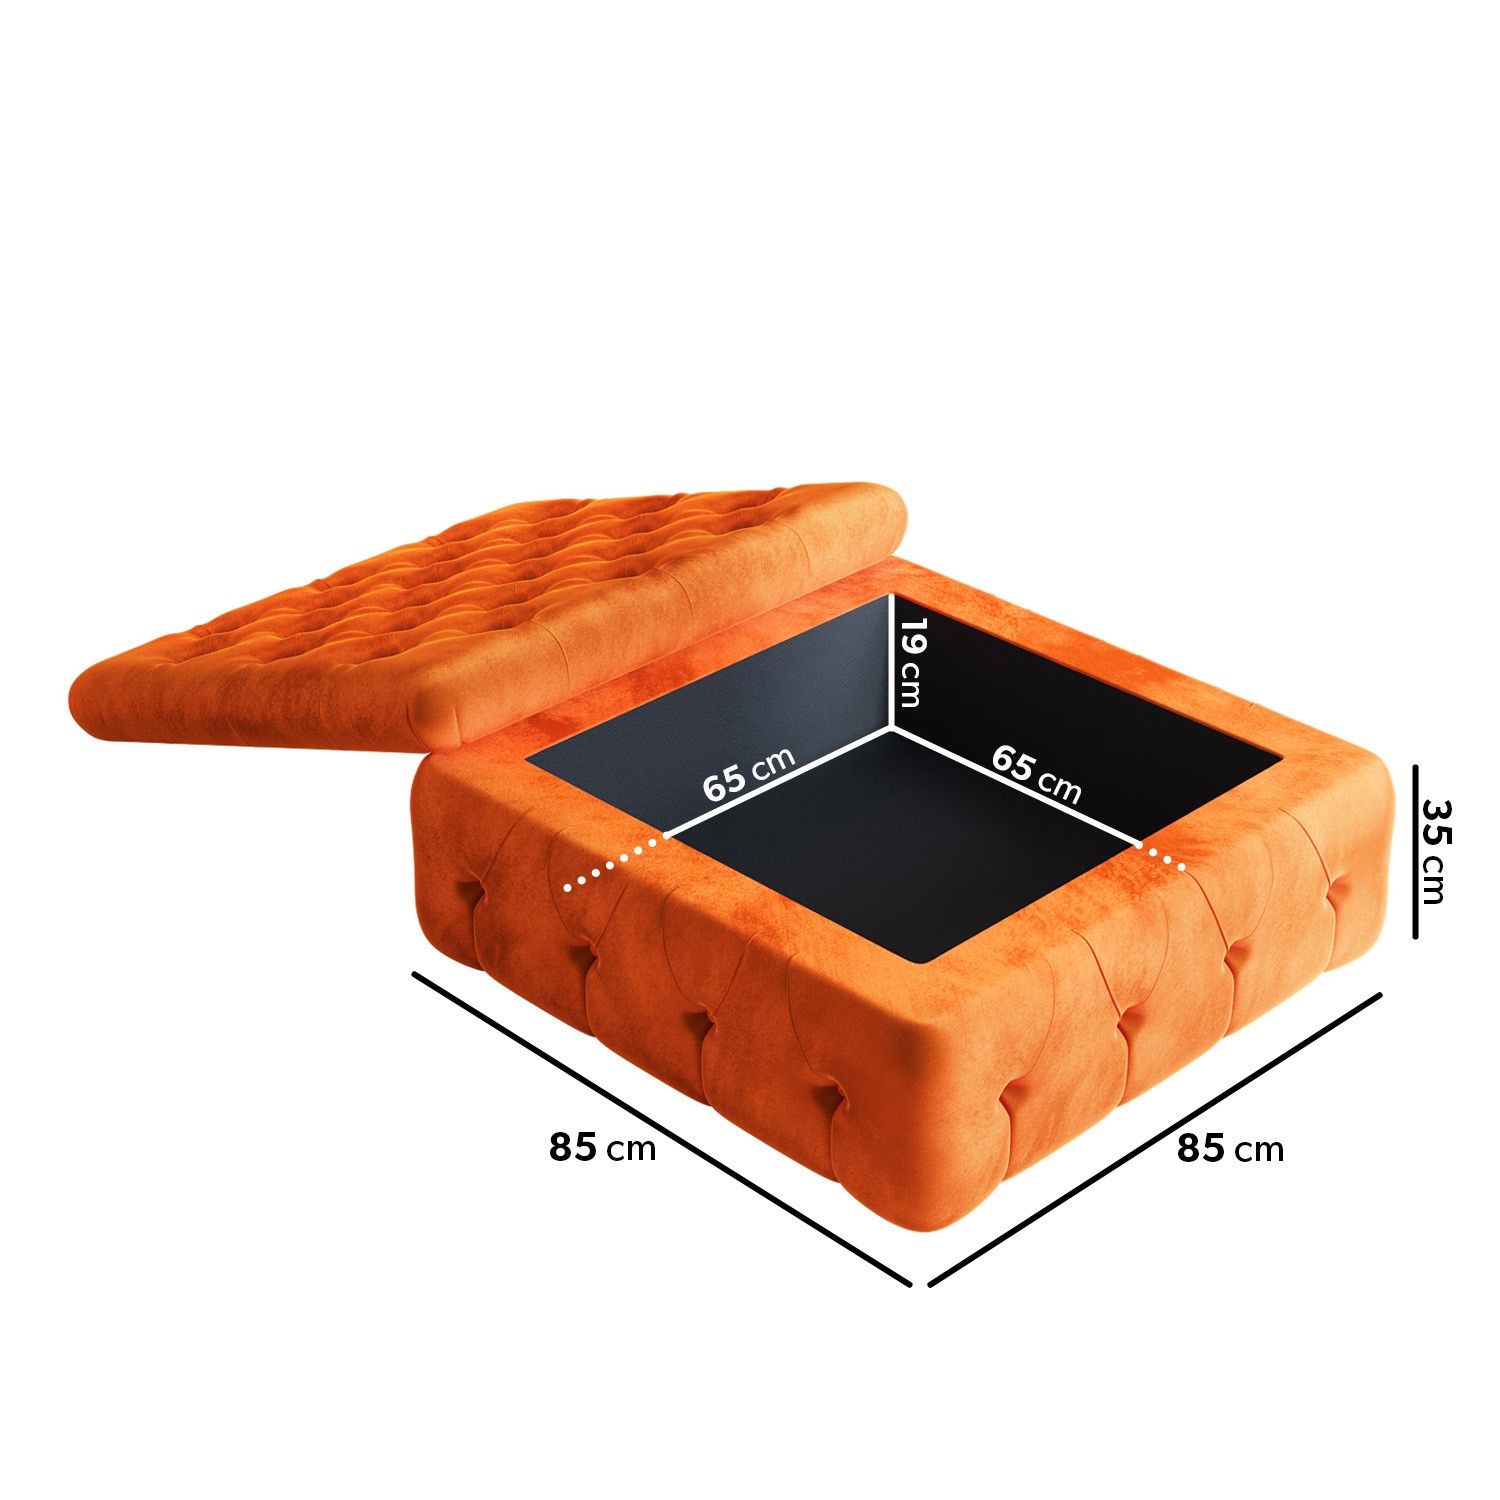 Read more about Large orange velvet storage footstool payton